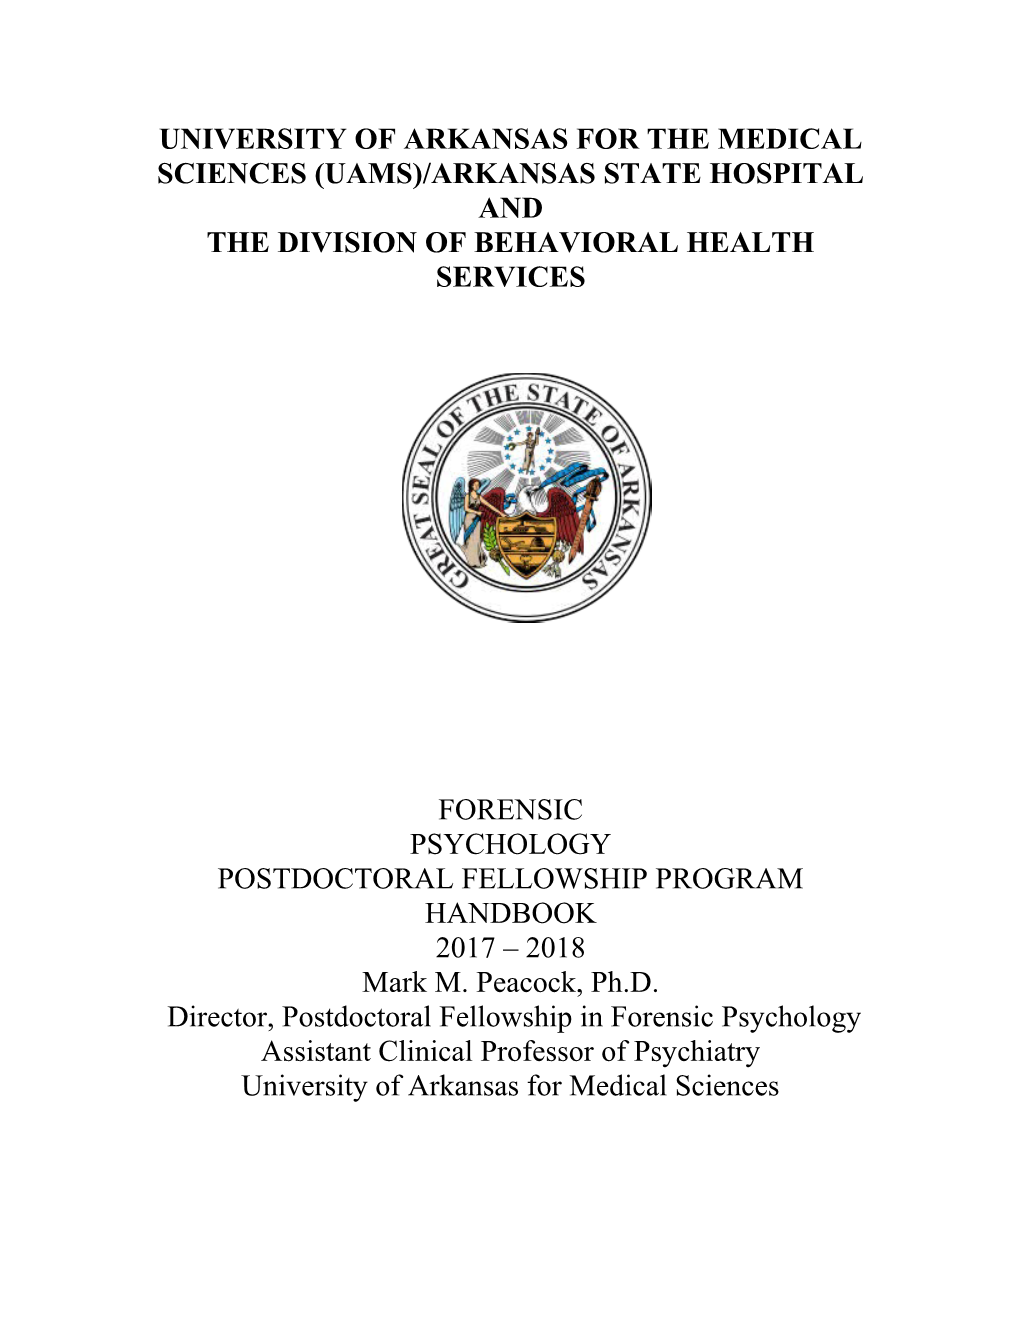 Forensic Psychology Postdoctoral Fellowship Program Handbook